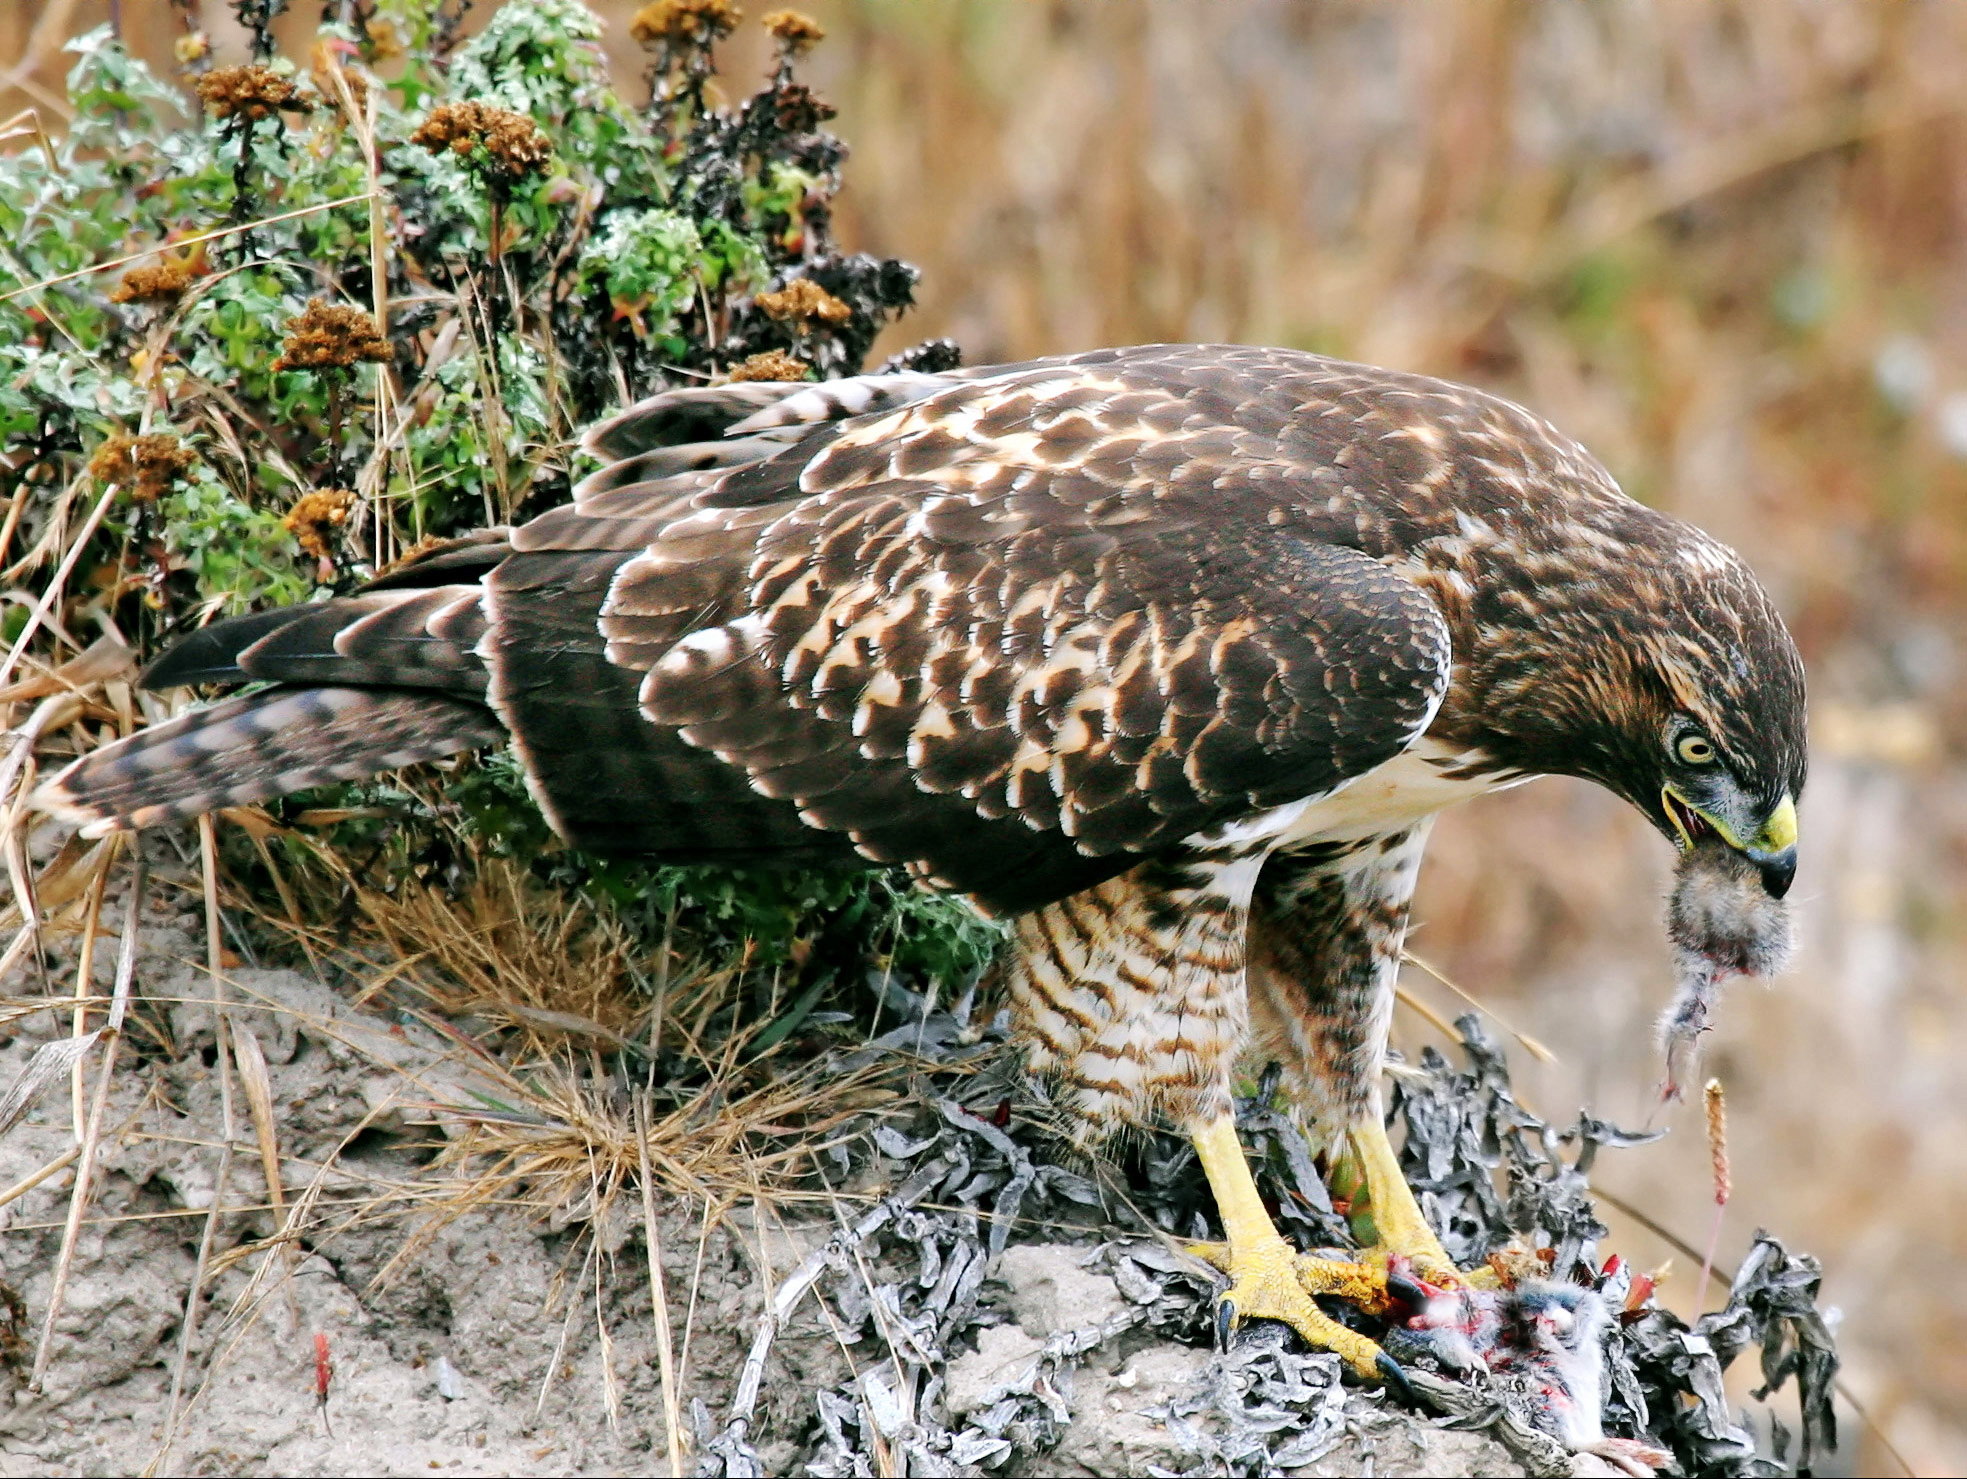 Hawk eating prey; by Steve Jurvetson [CC BY 2.0], via Wikimedia Commons